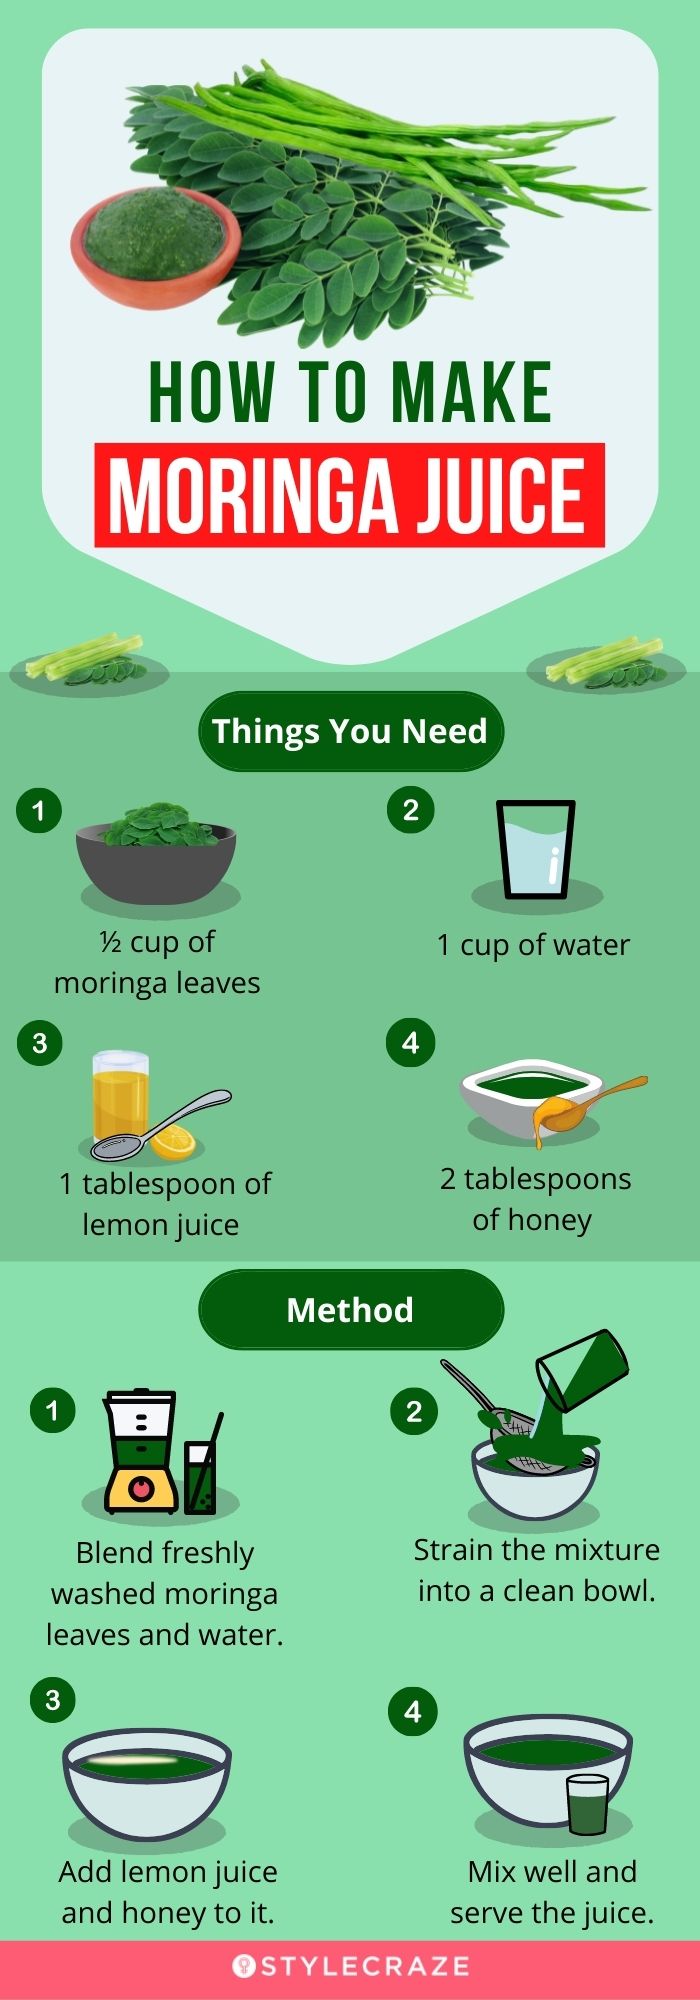 how to make moringa juice [infographic]